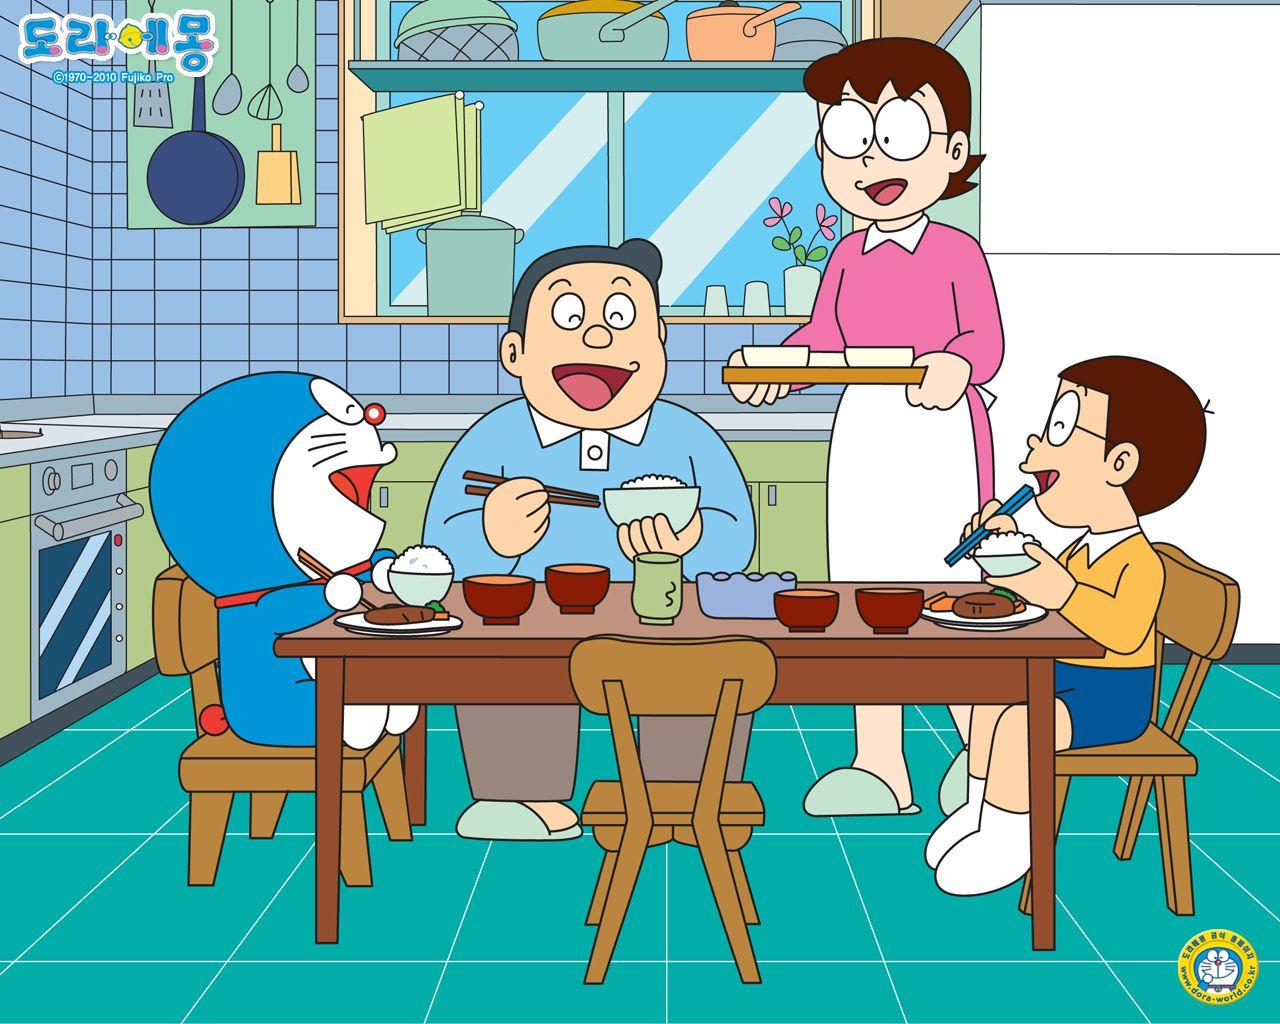 Doraemon HD Wallpaper